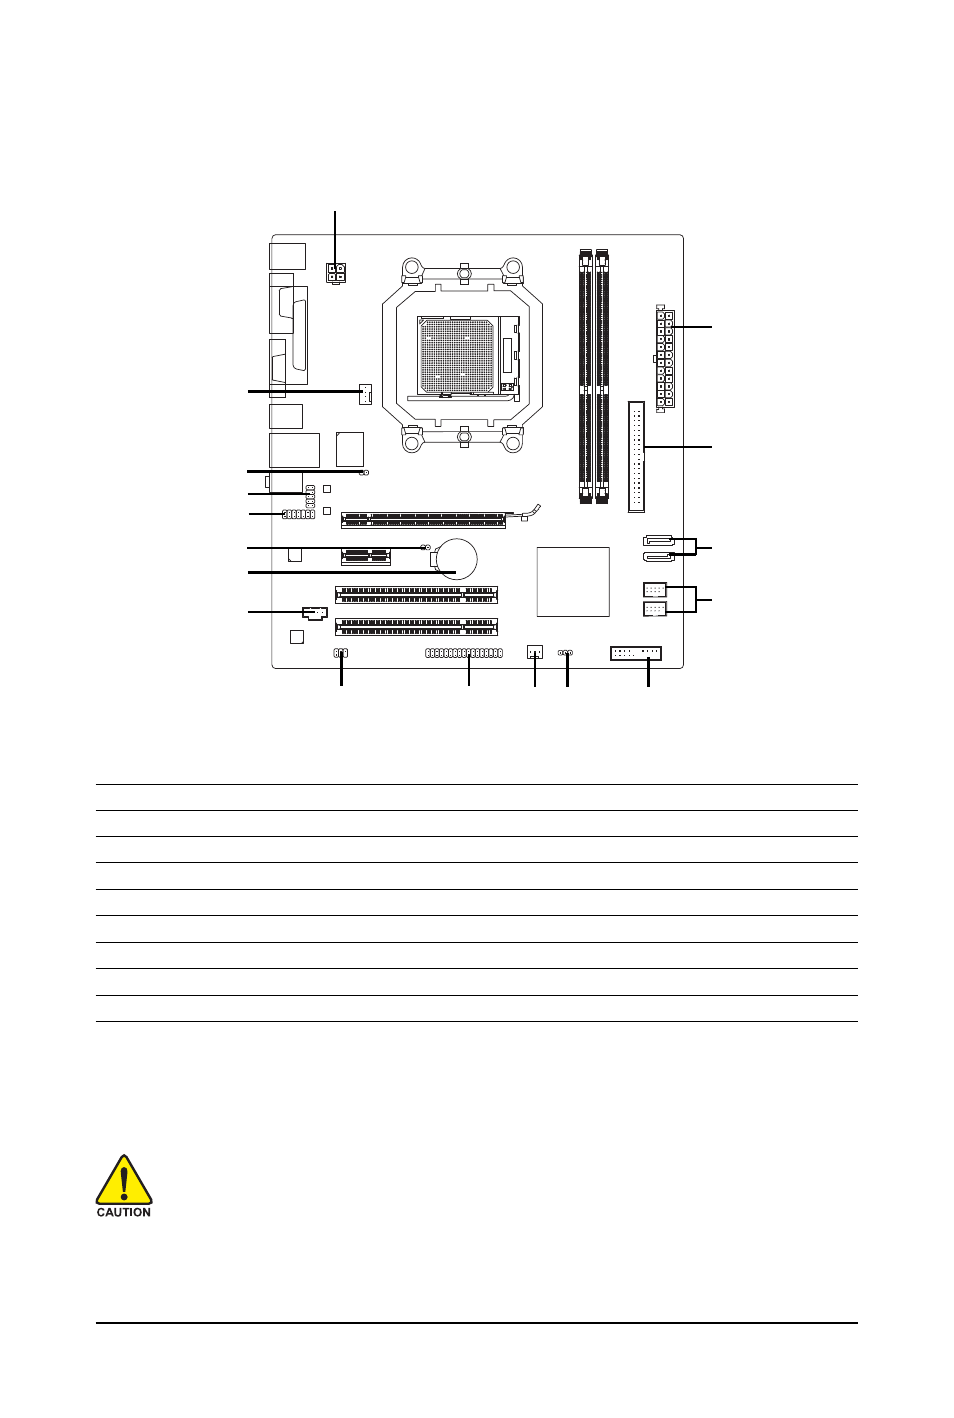 7 internal connectors | GIGABYTE GA-M61PME-S2P User Manual | Page 20 / 88 |  Original mode